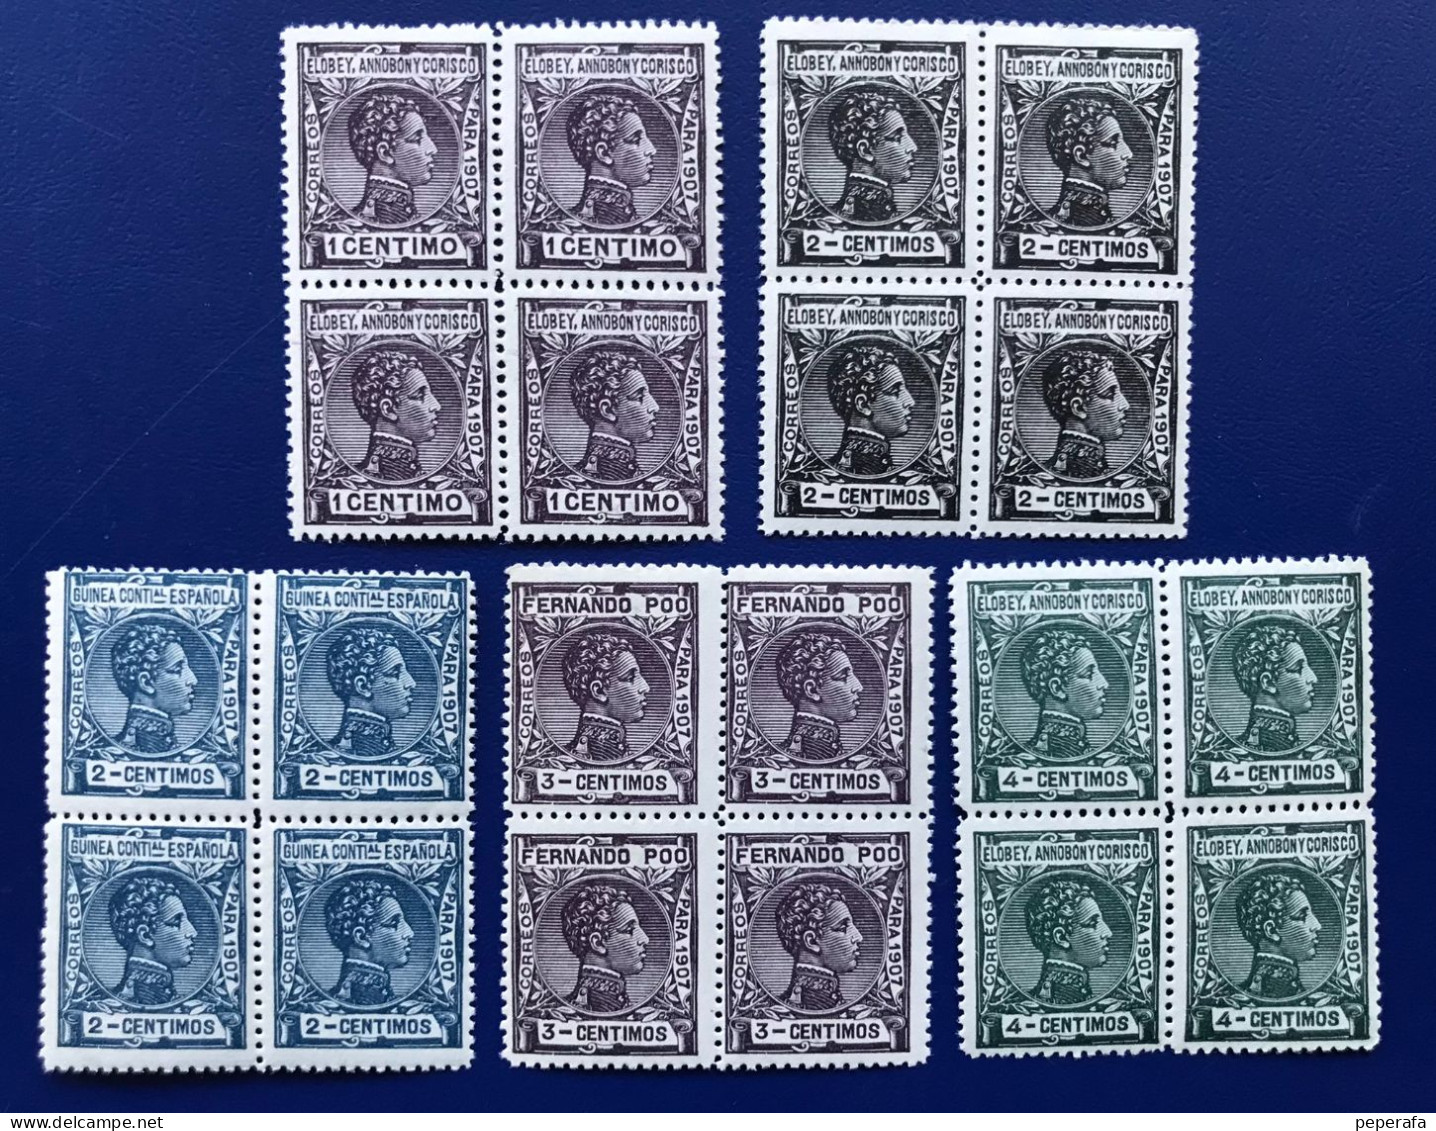 Spain, Spagne, España, GUINEA ESPAÑOLA, GOLFO DE GUINEA 1909, 5 BLOQUE DE 4 SELLOS NUEVOS - Guinea Española